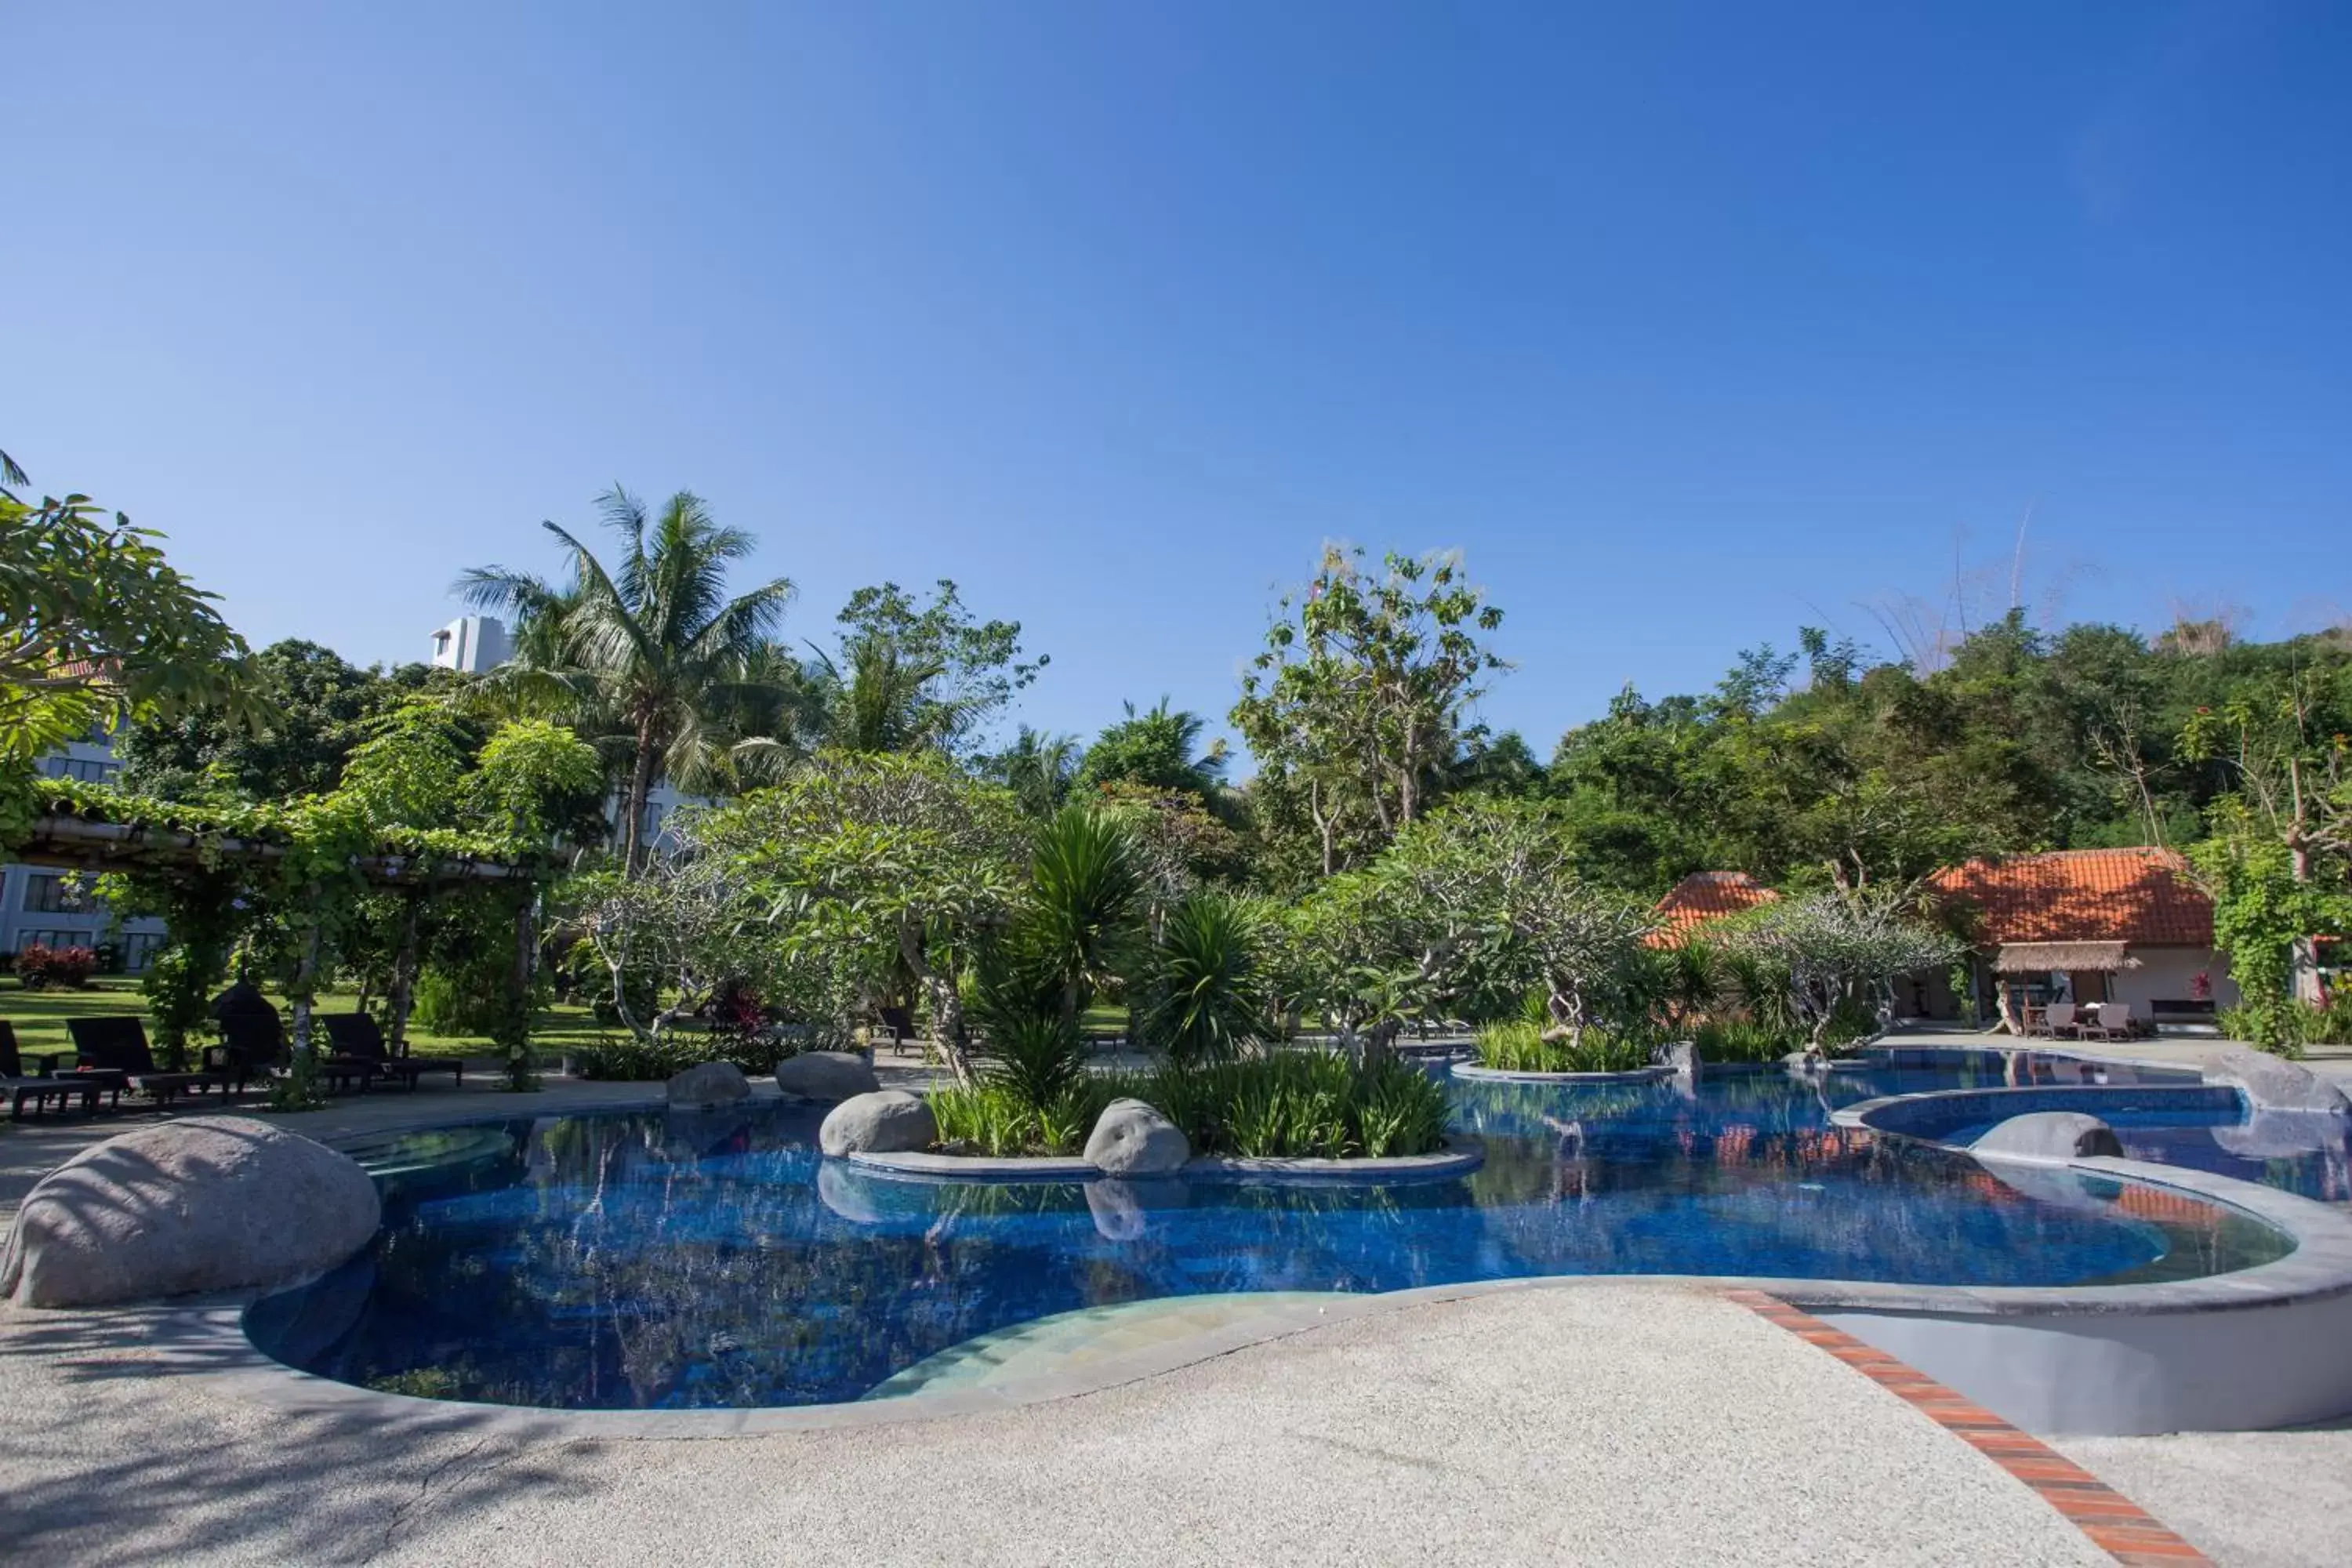 Swimming Pool in Bintang Flores Hotel